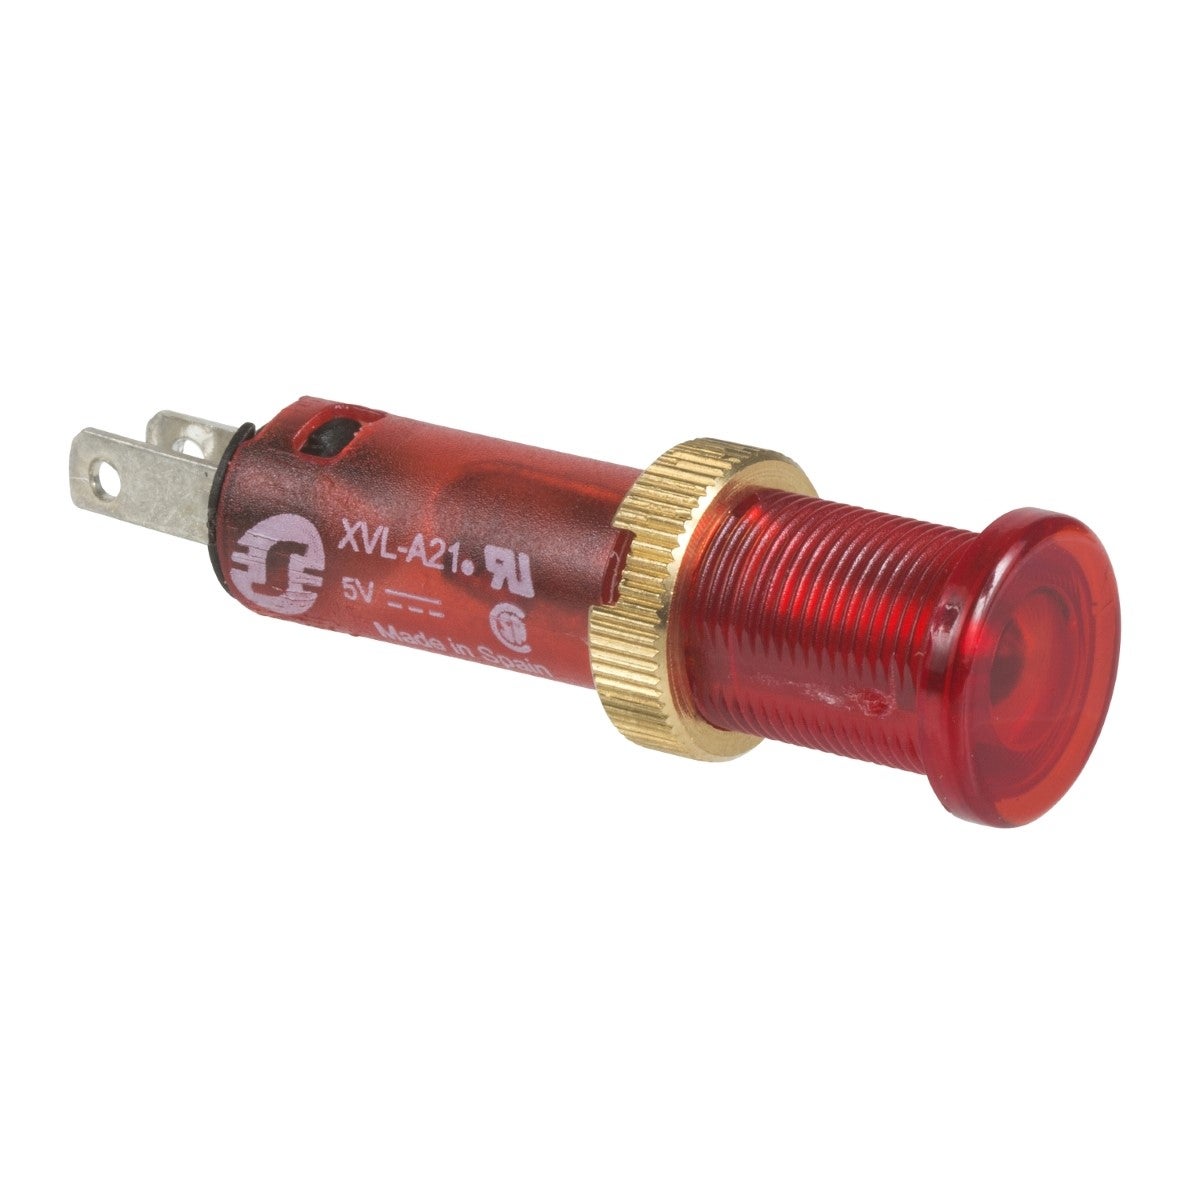 Pilot light, Harmony XVL, plastic, red, 8mm, covered LED, faston connectors, 24V DC